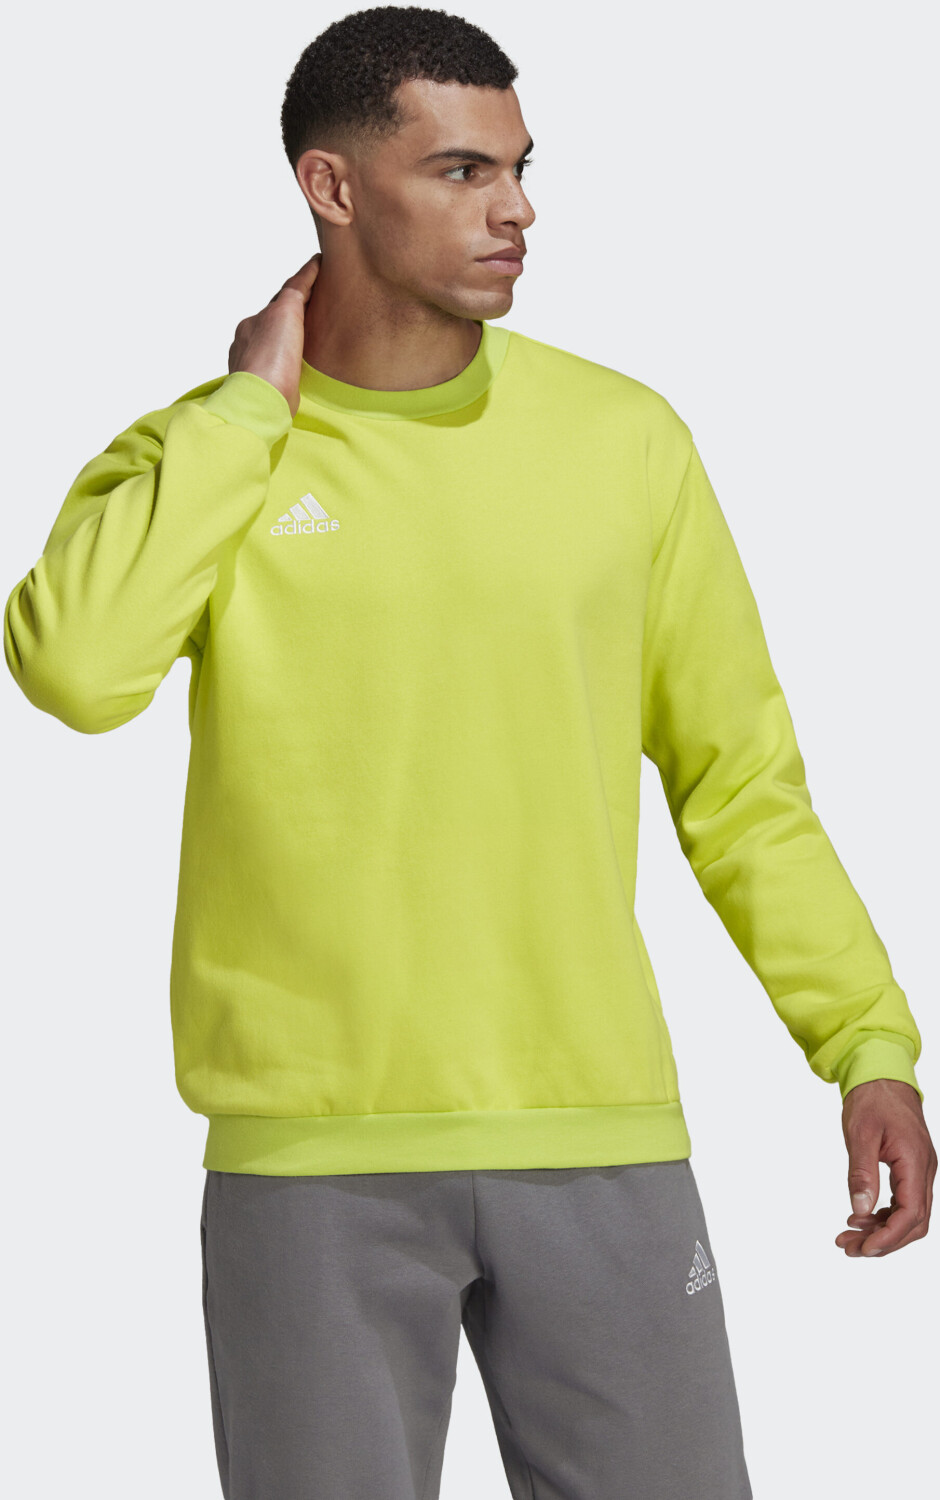 Adidas Entrada 22 Sweatshirt team semi sol yellow ab 19,95 € |  Preisvergleich bei